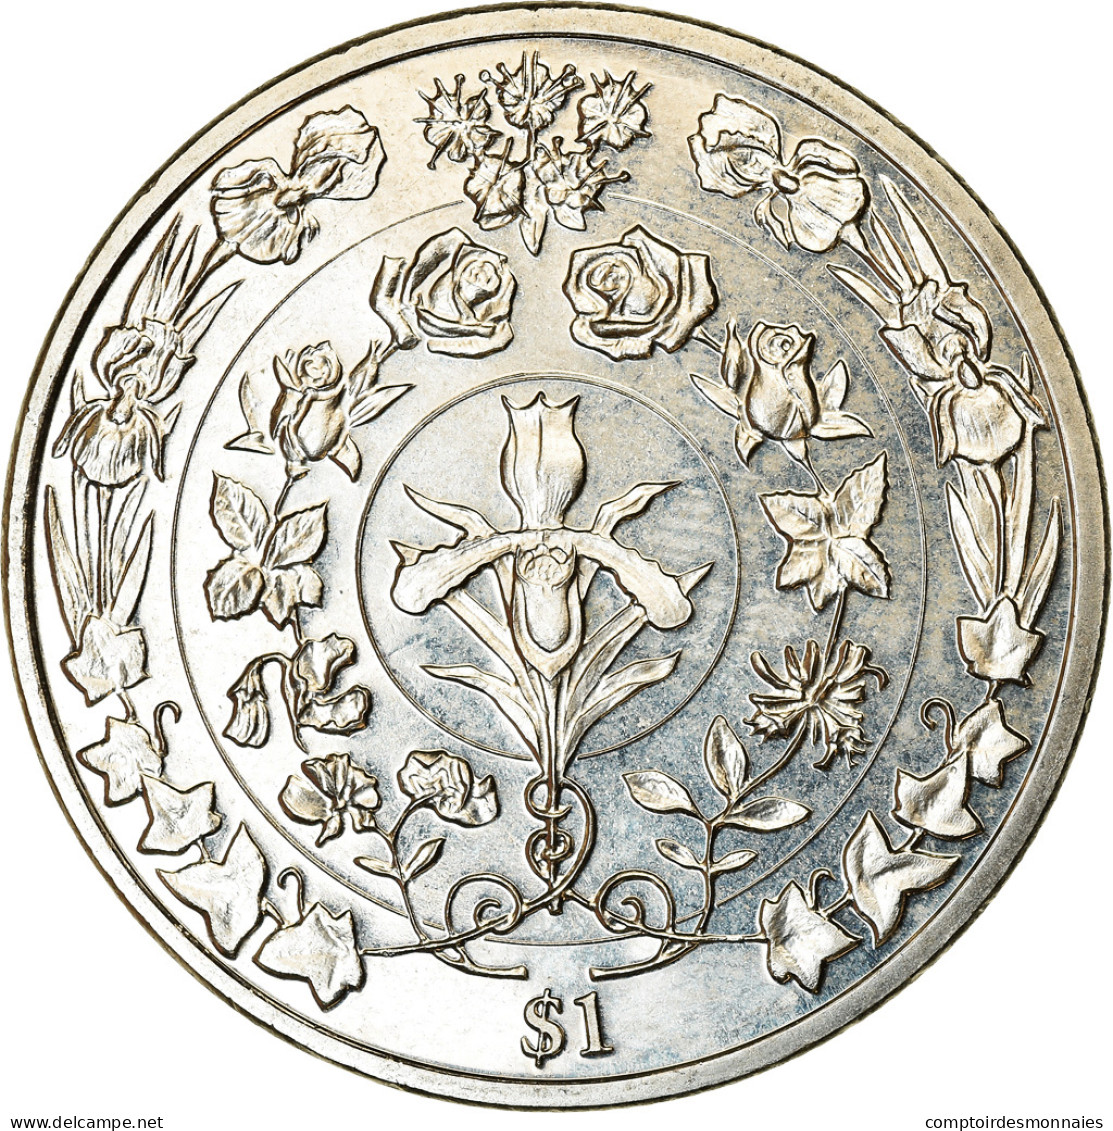 Monnaie, BRITISH VIRGIN ISLANDS, Dollar, 2017, Franklin Mint, Reine Elizabeth - - British Virgin Islands